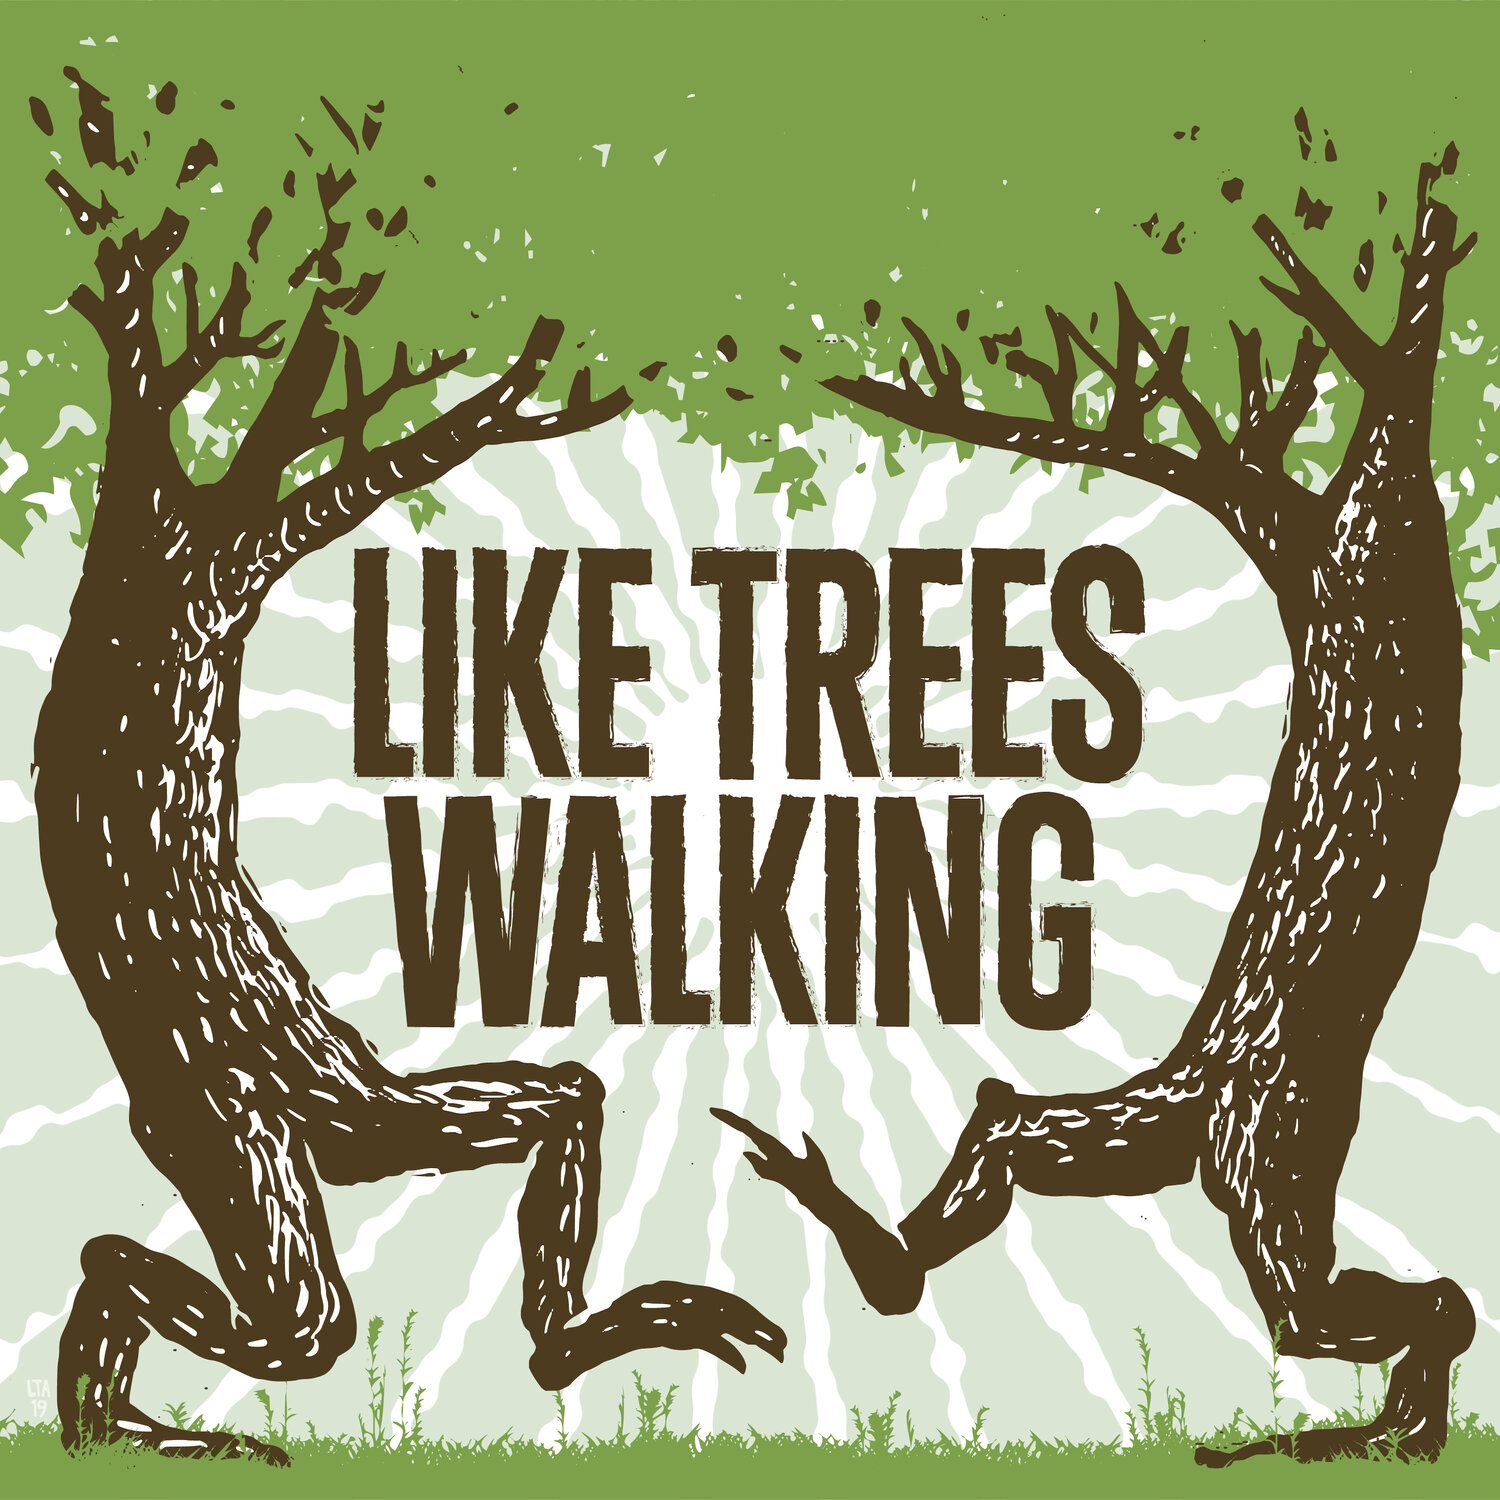 They like trees. Walking Tree. Лайк дерево. Walking Tree Publishers. The Tree is Walking.